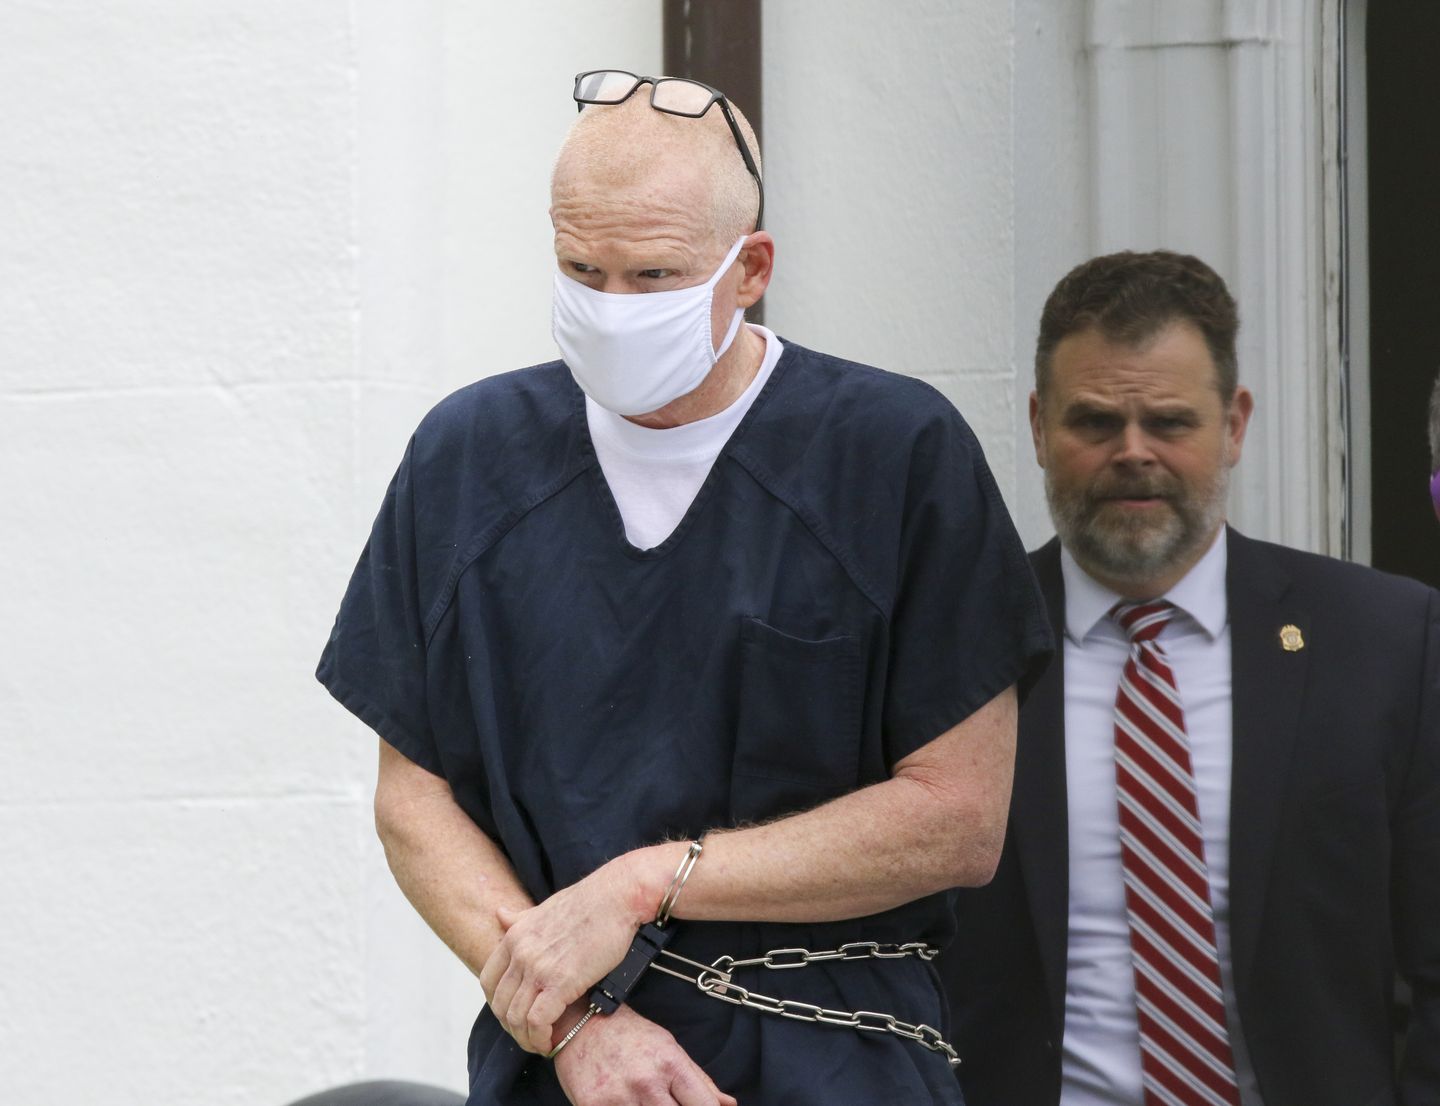 Alex Murdaugh goes on trial in 2021 killings of wife, son